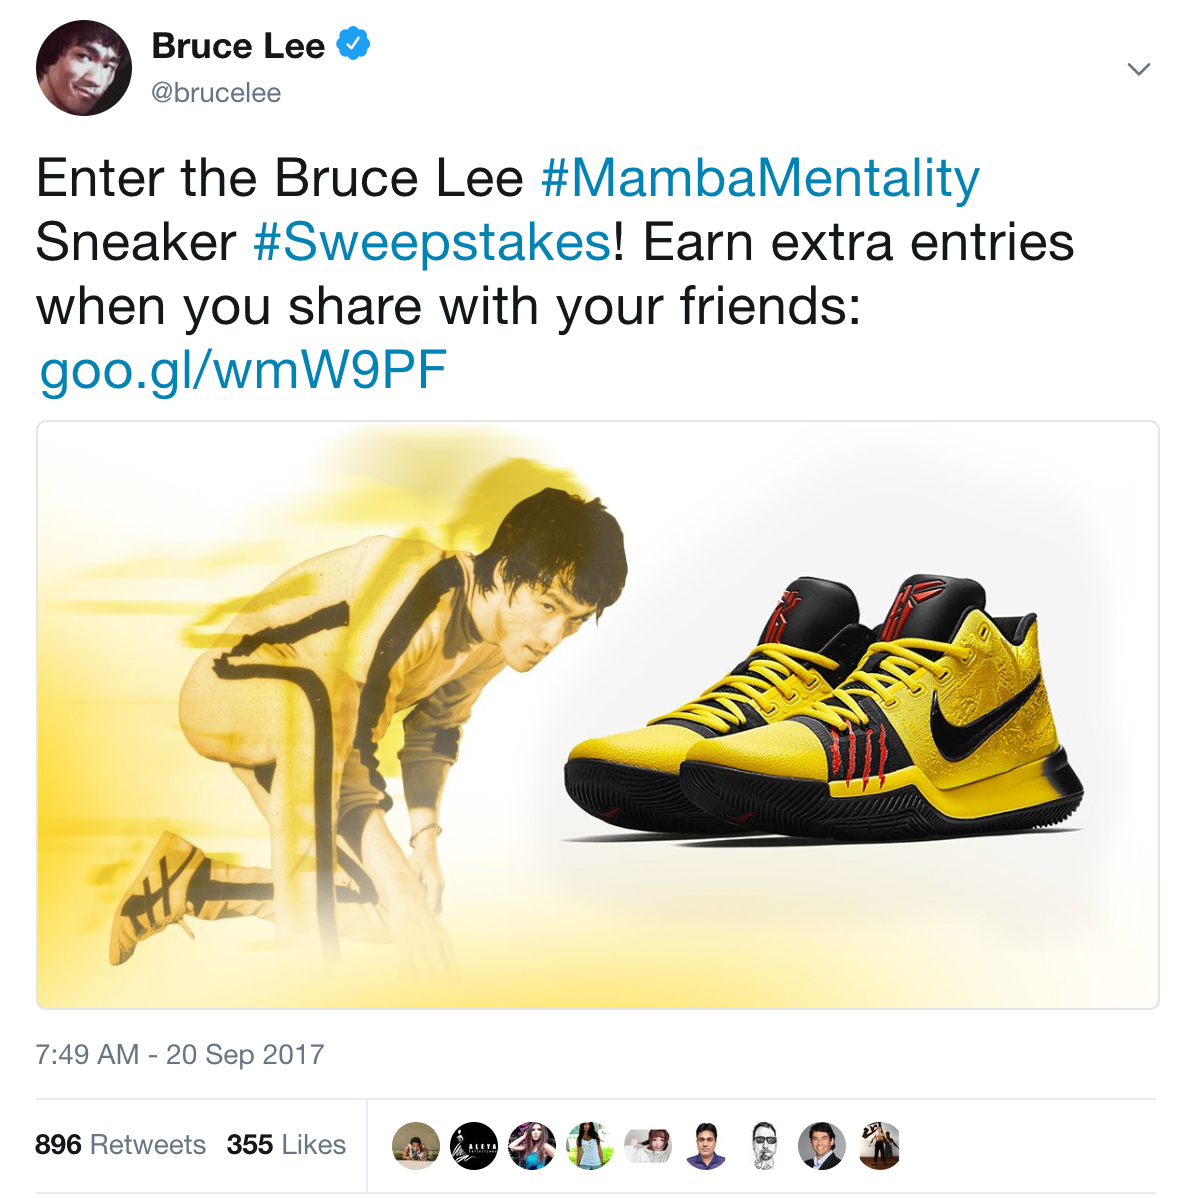 Bruce Lee Mamba Mentality Twitter Posts